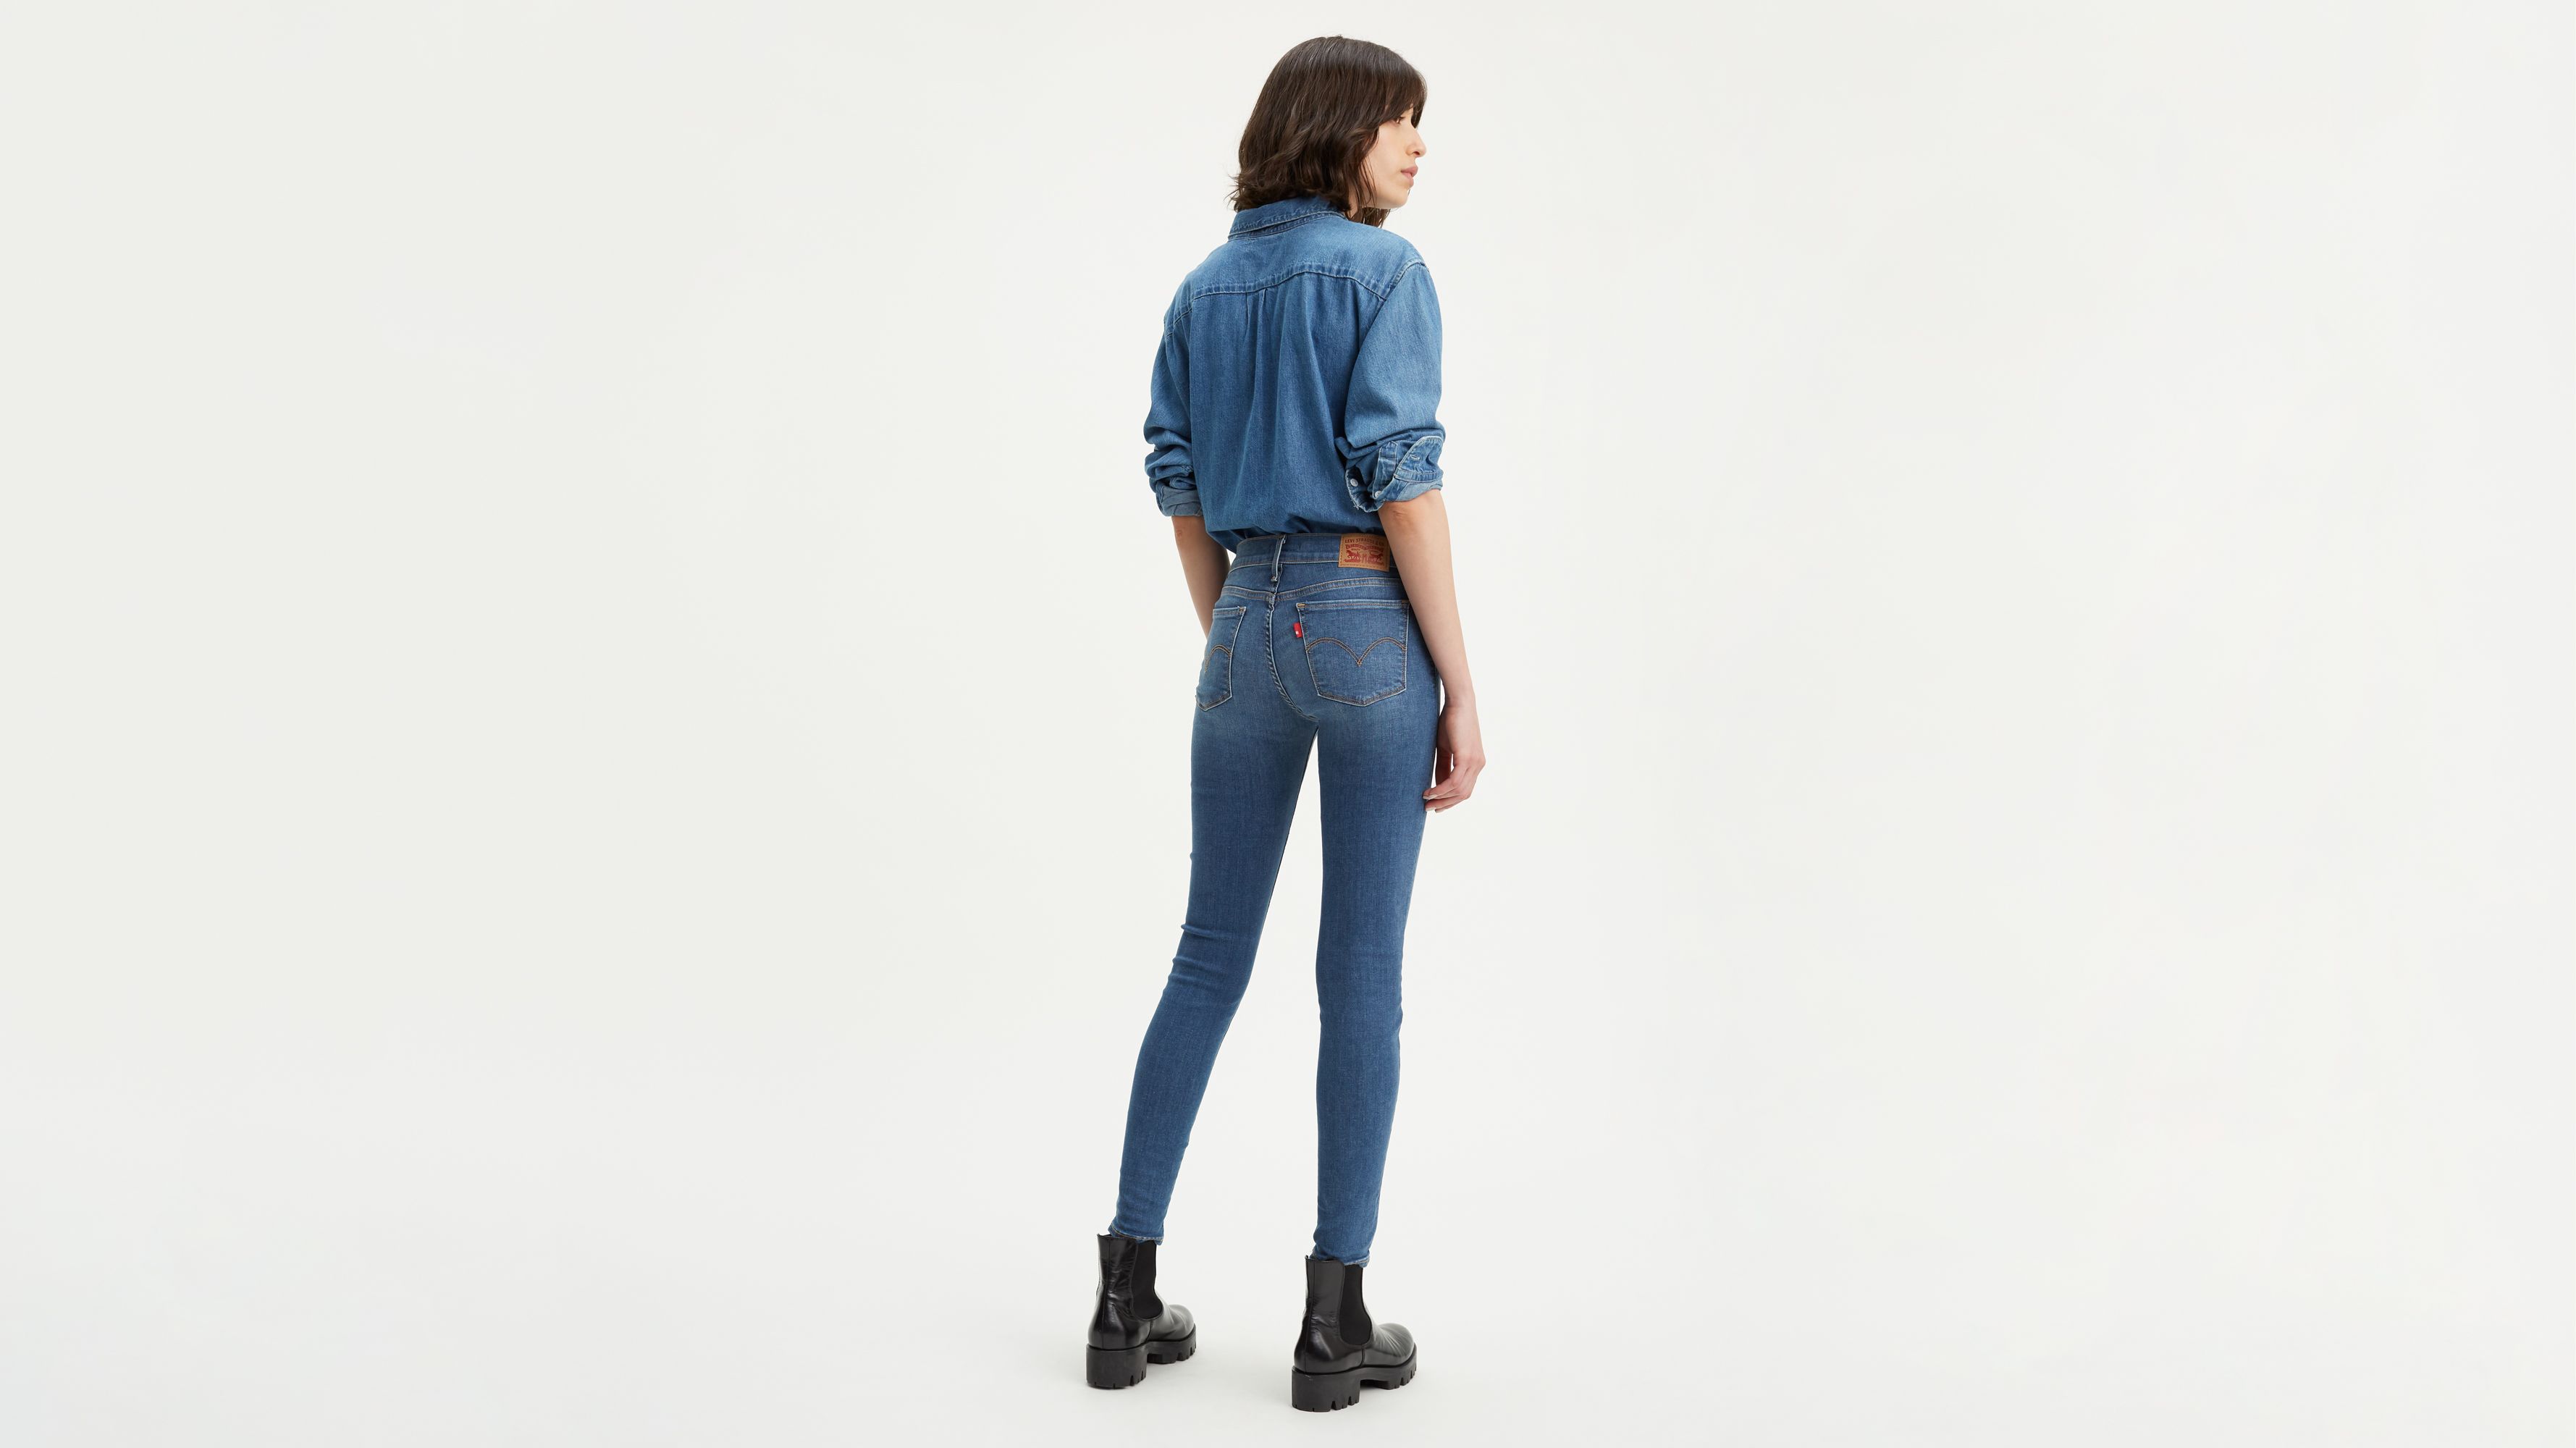 levi's women's super skinny jeans